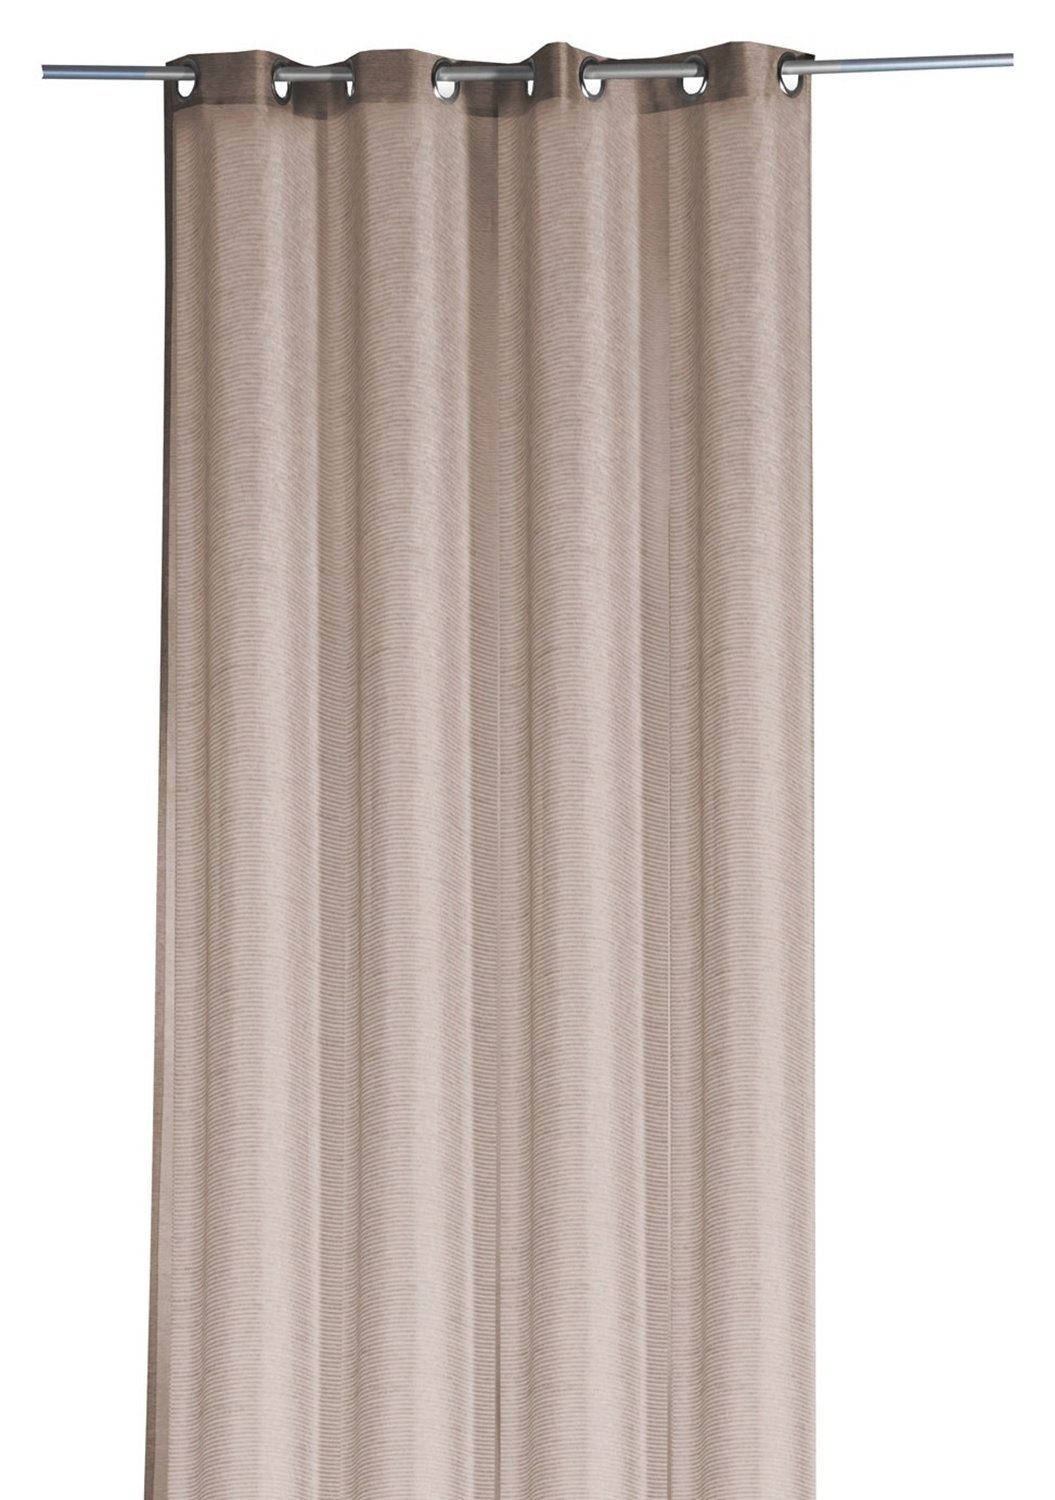 Vorhang SANDY, Ösenschal, Braun, L cm cm, 245 B x 135 halbtransparent Ösen